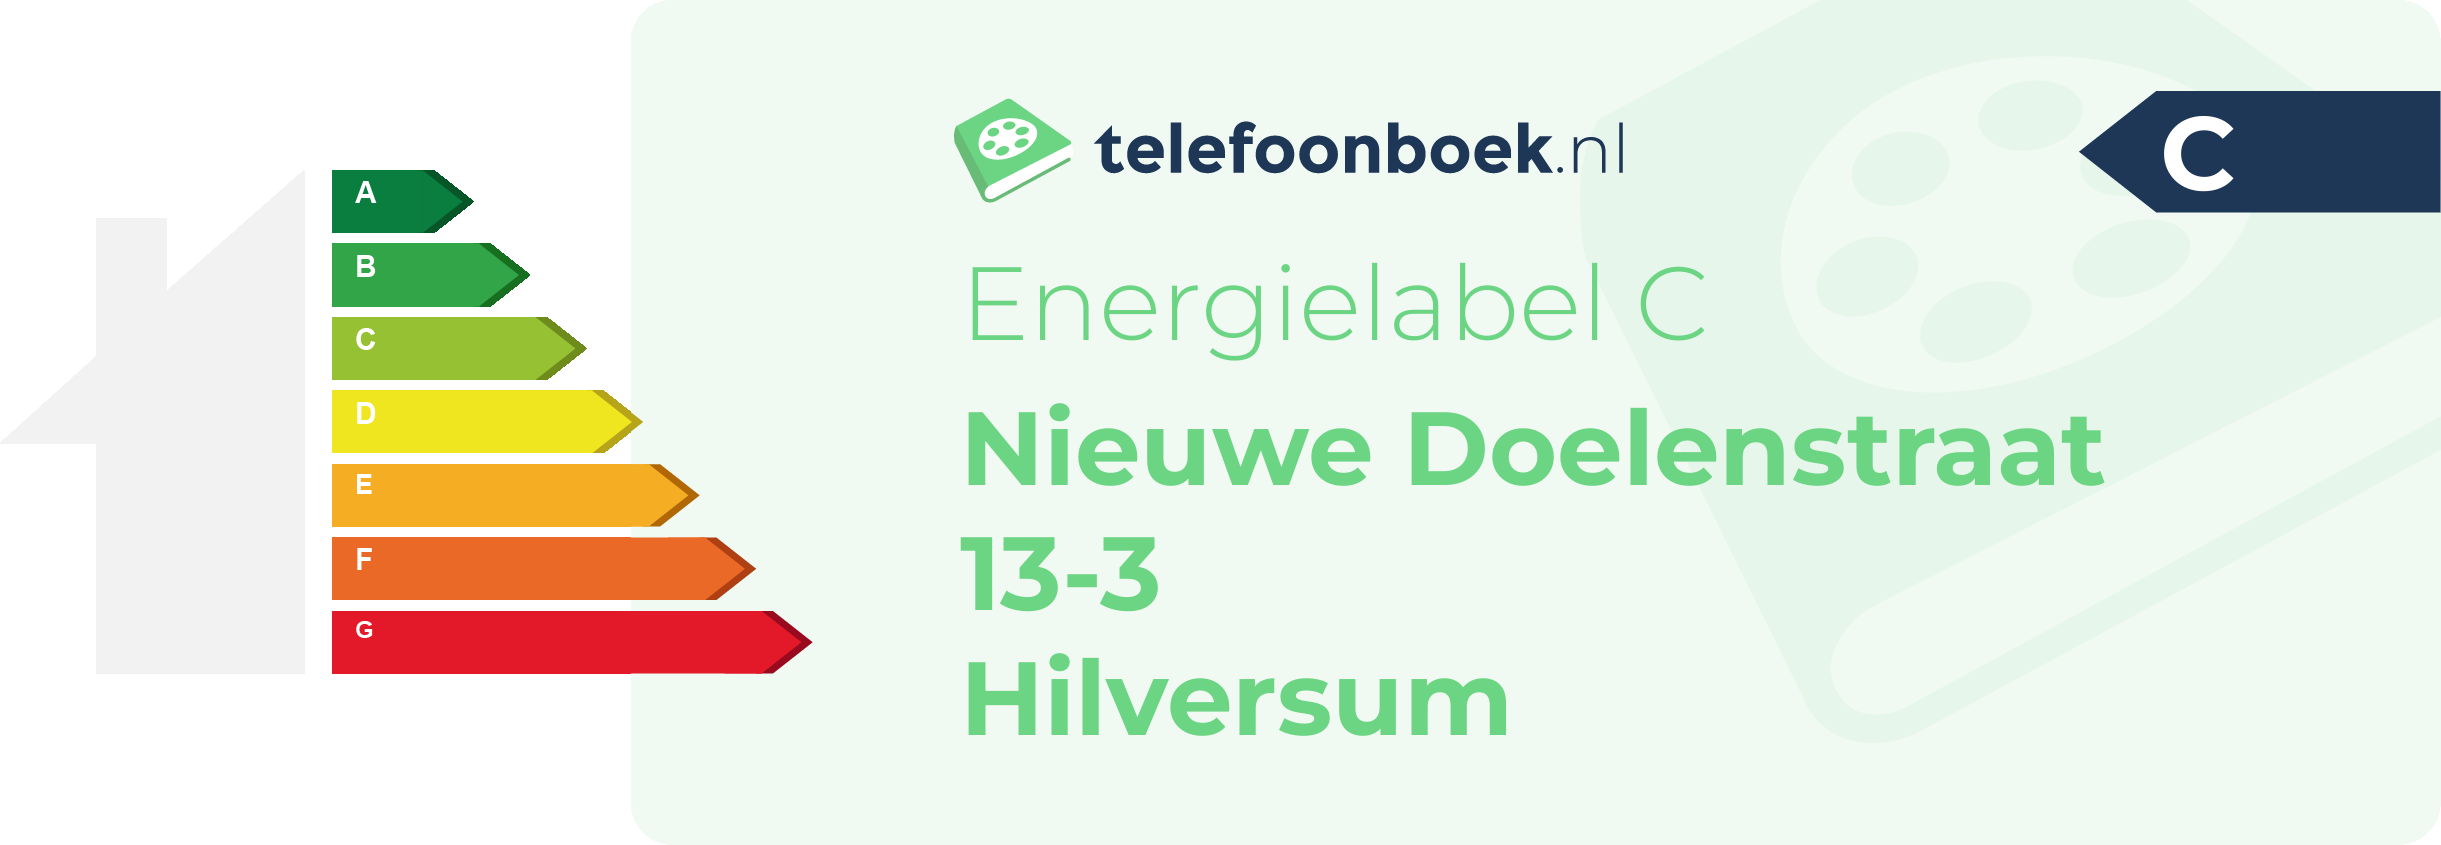 Energielabel Nieuwe Doelenstraat 13-3 Hilversum